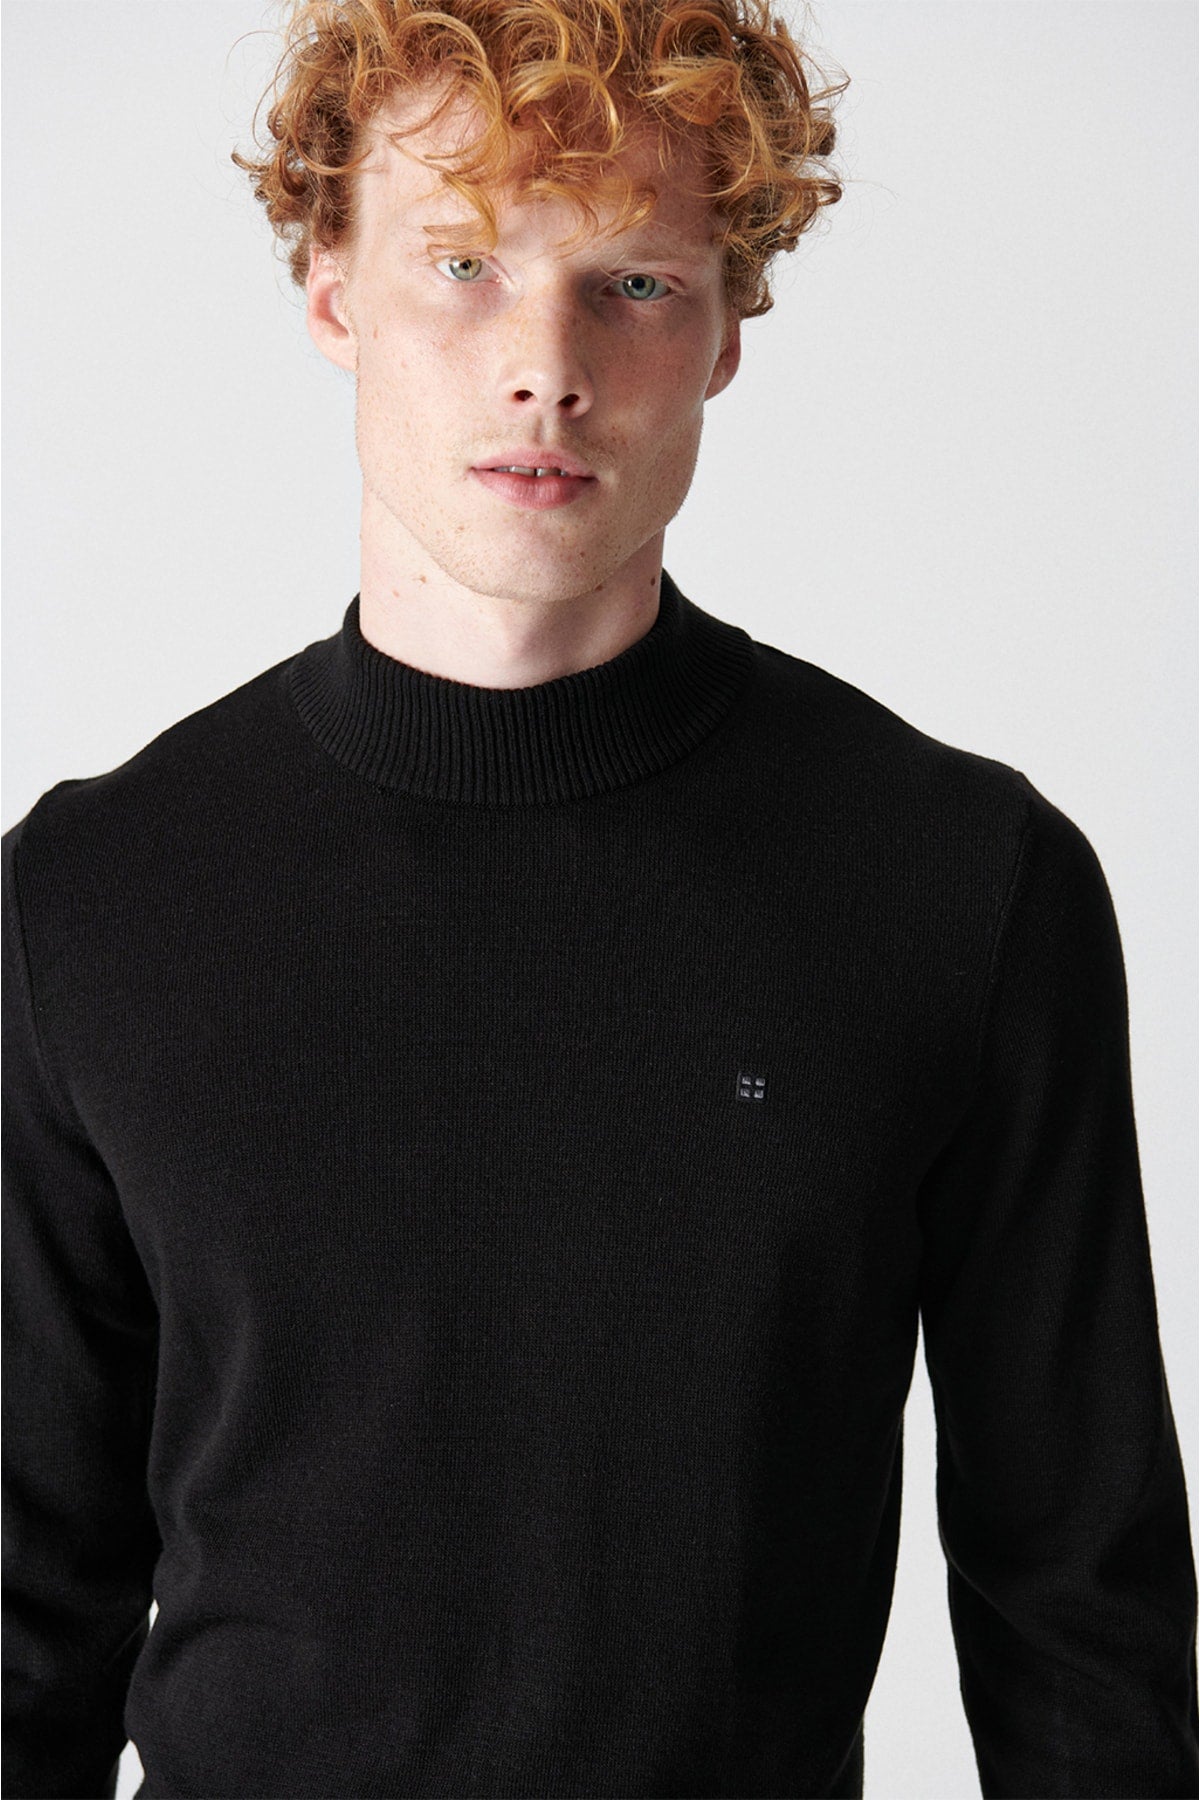 Unisex Black Half Fisherman Collar Follow -up knitwear sweater E005001